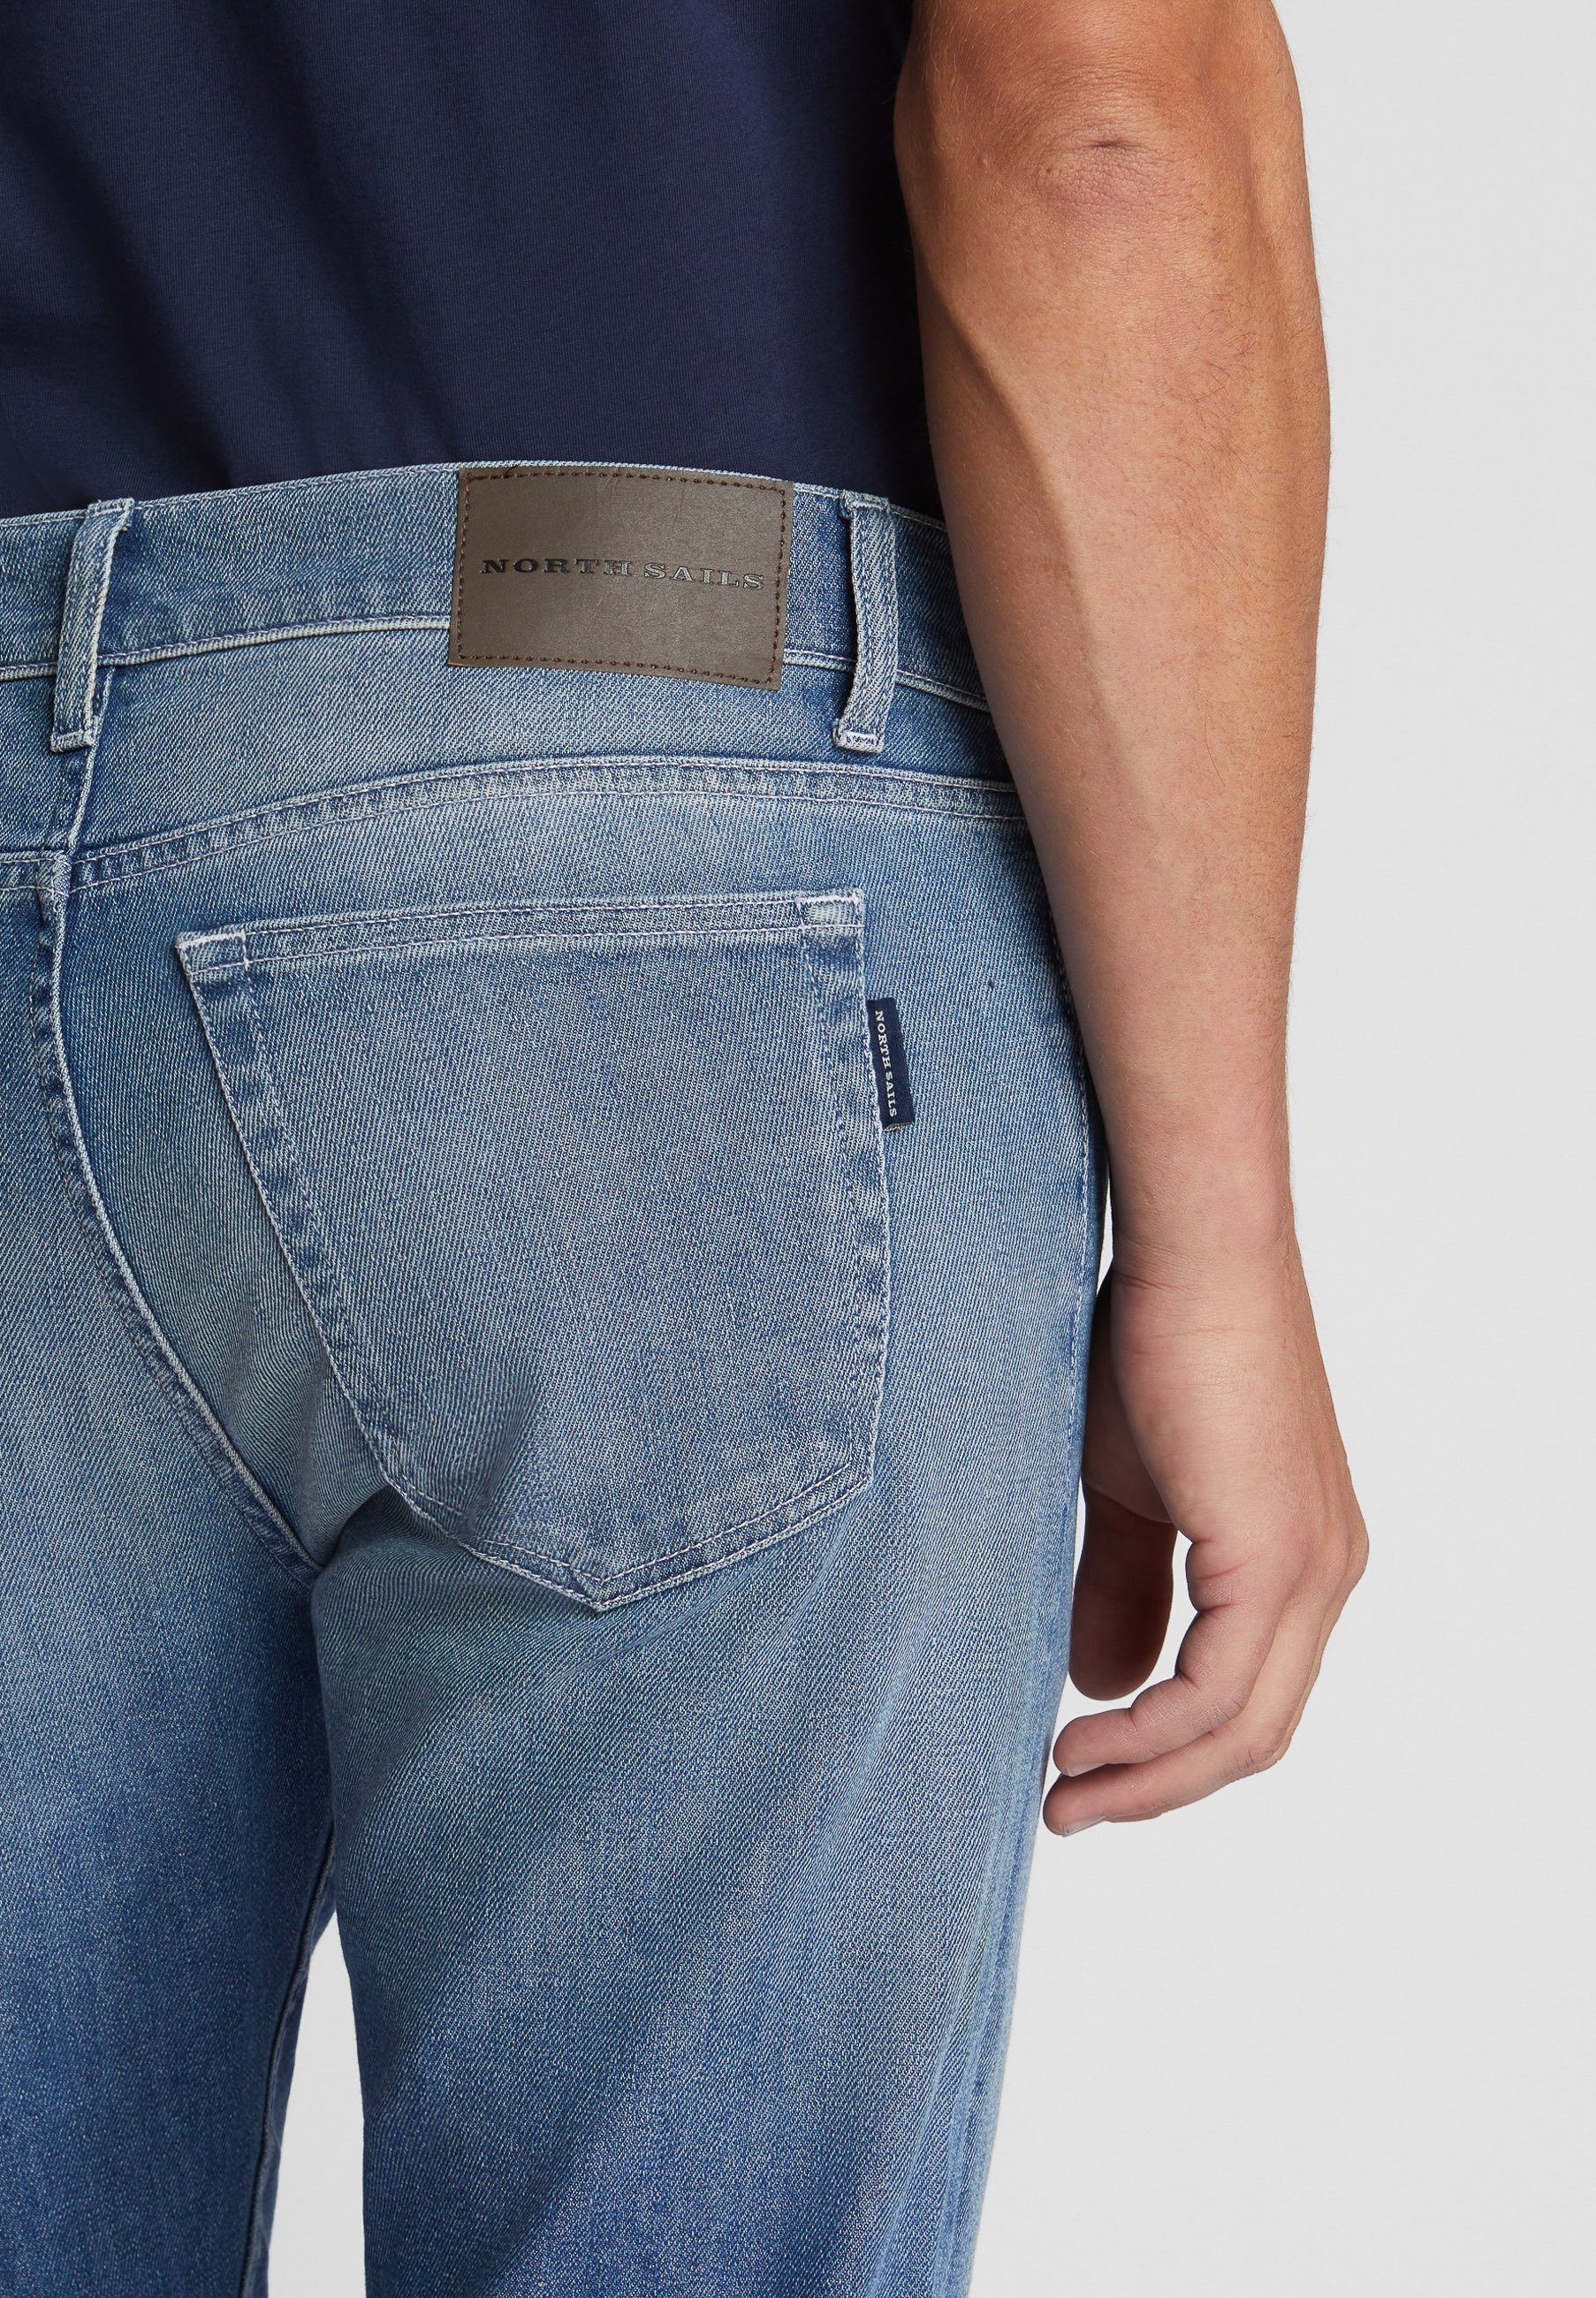 Sails North abbaubare 5-Pocket-Hose Biologisch Denim-Jeans